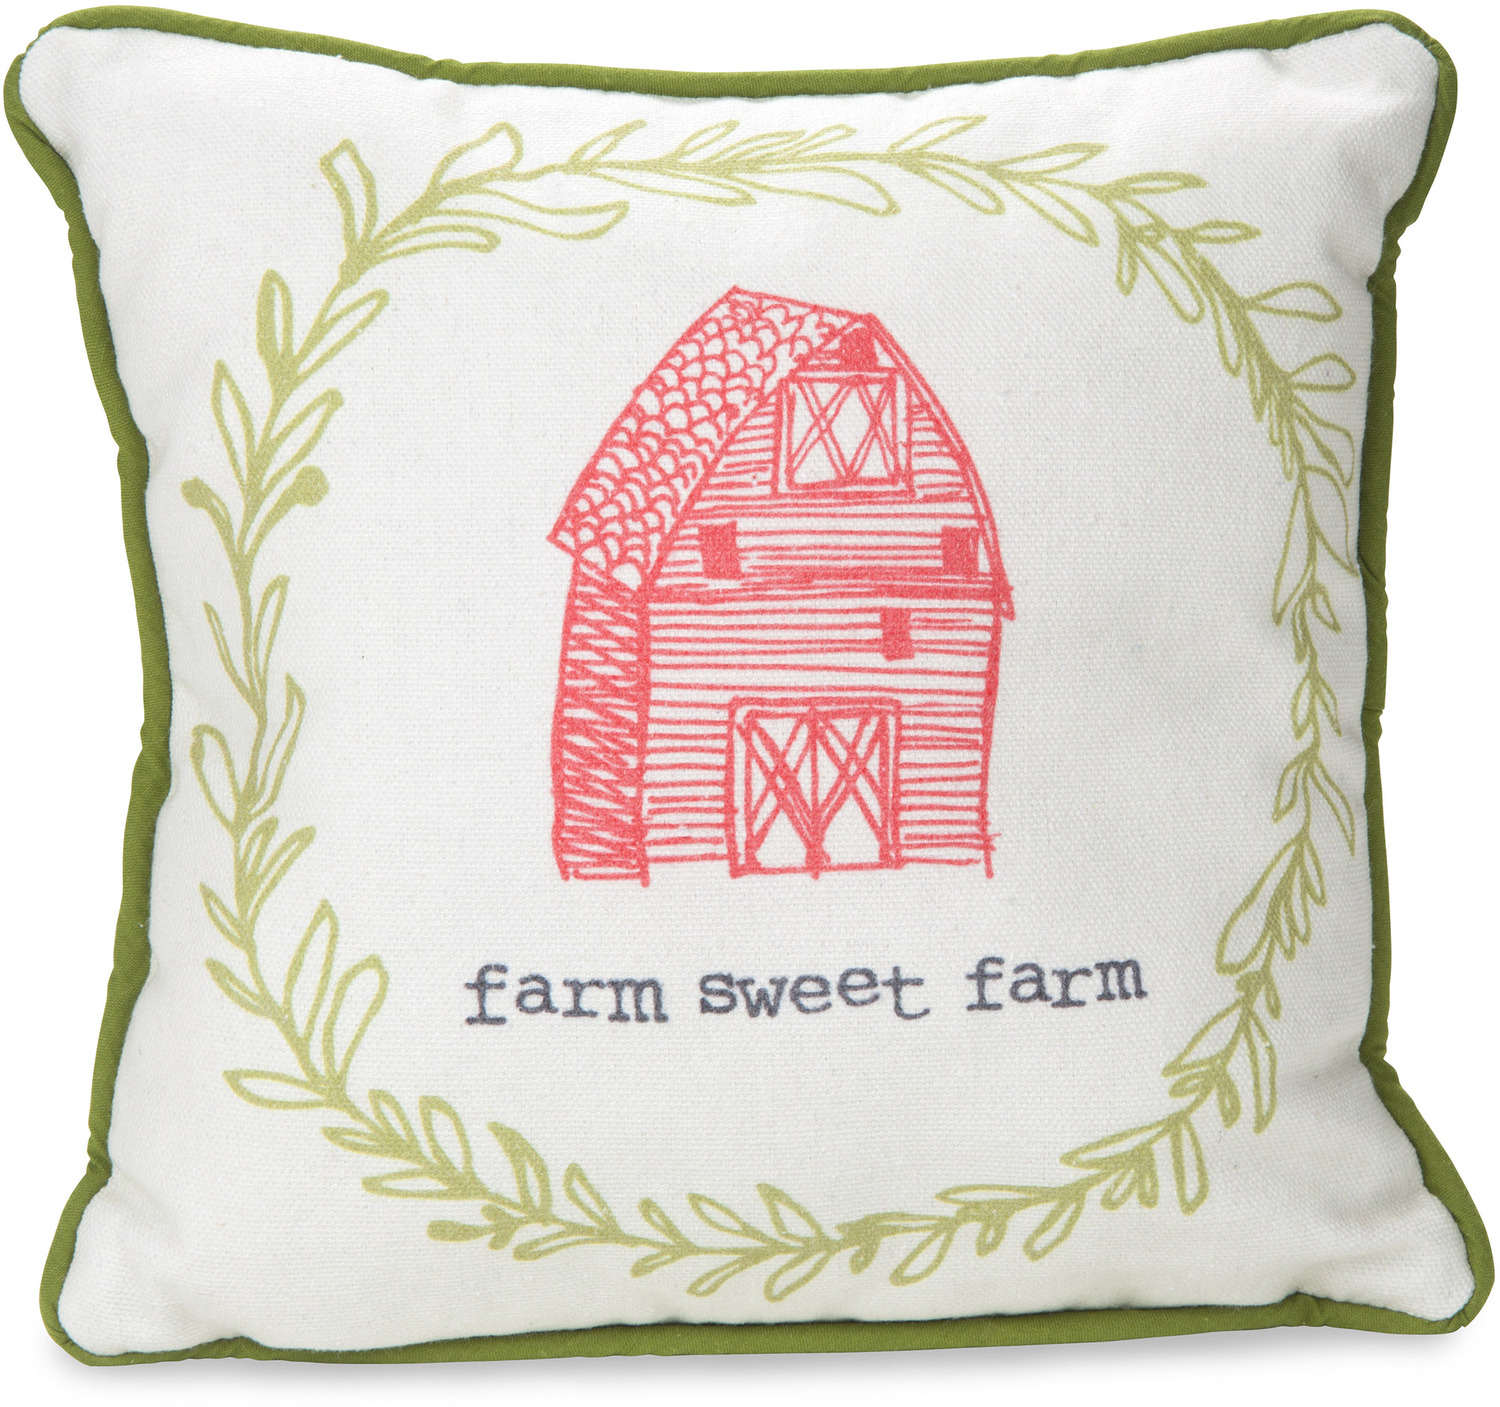 Farm Sweet Farm by Live Simply by Amylee - Farm Sweet Farm - 10" x 10" Canvas Pillow